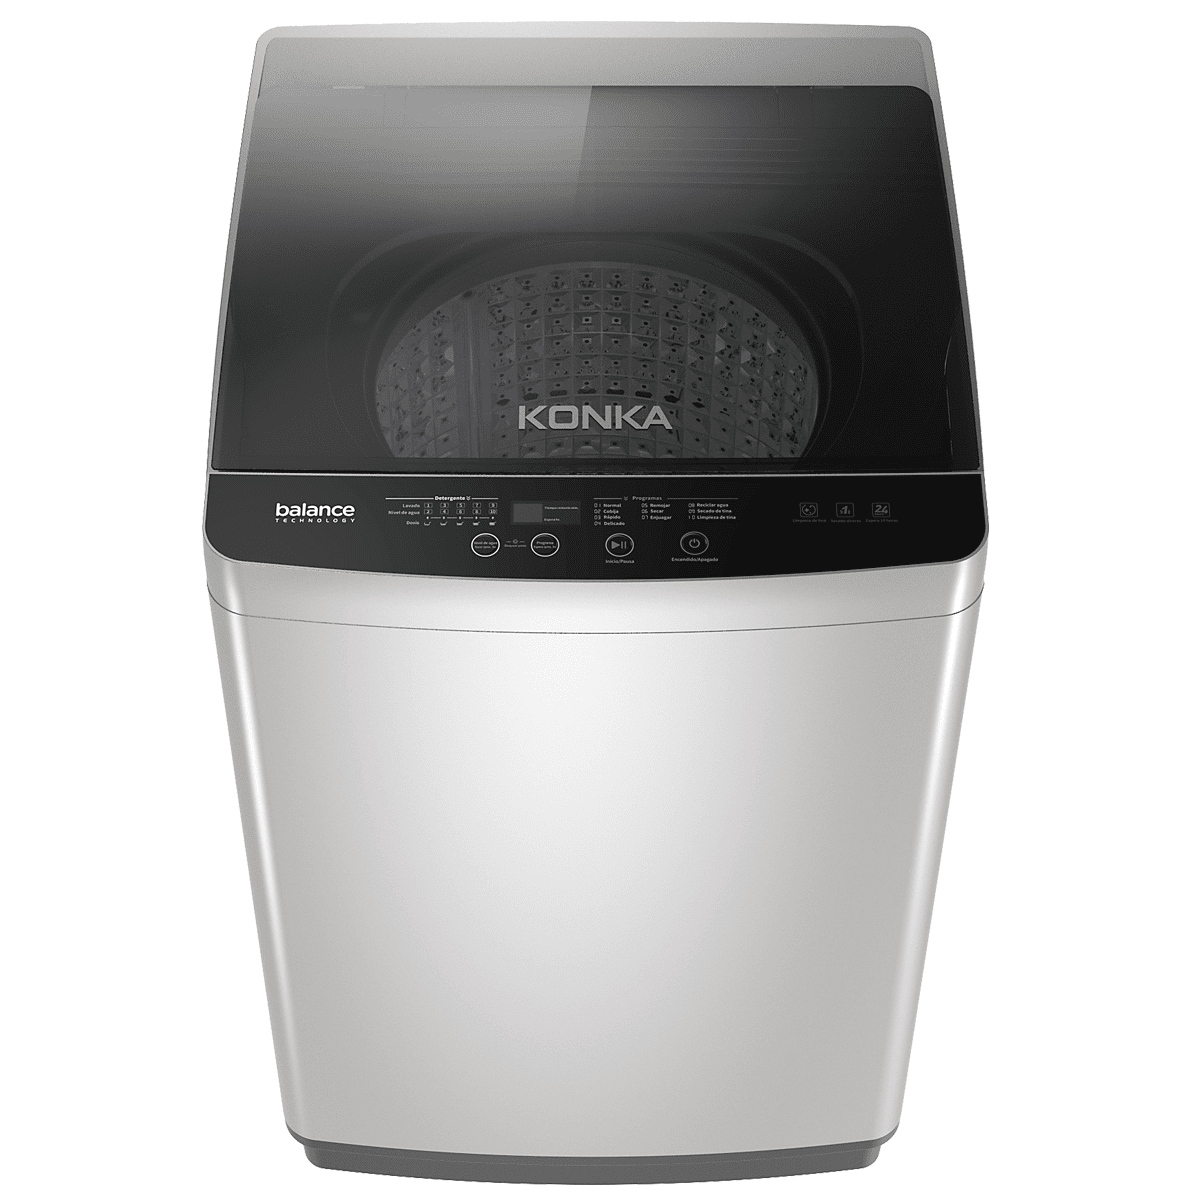 KONKA 5kg Lavadora Automática XQB50-S05 - GD MART.